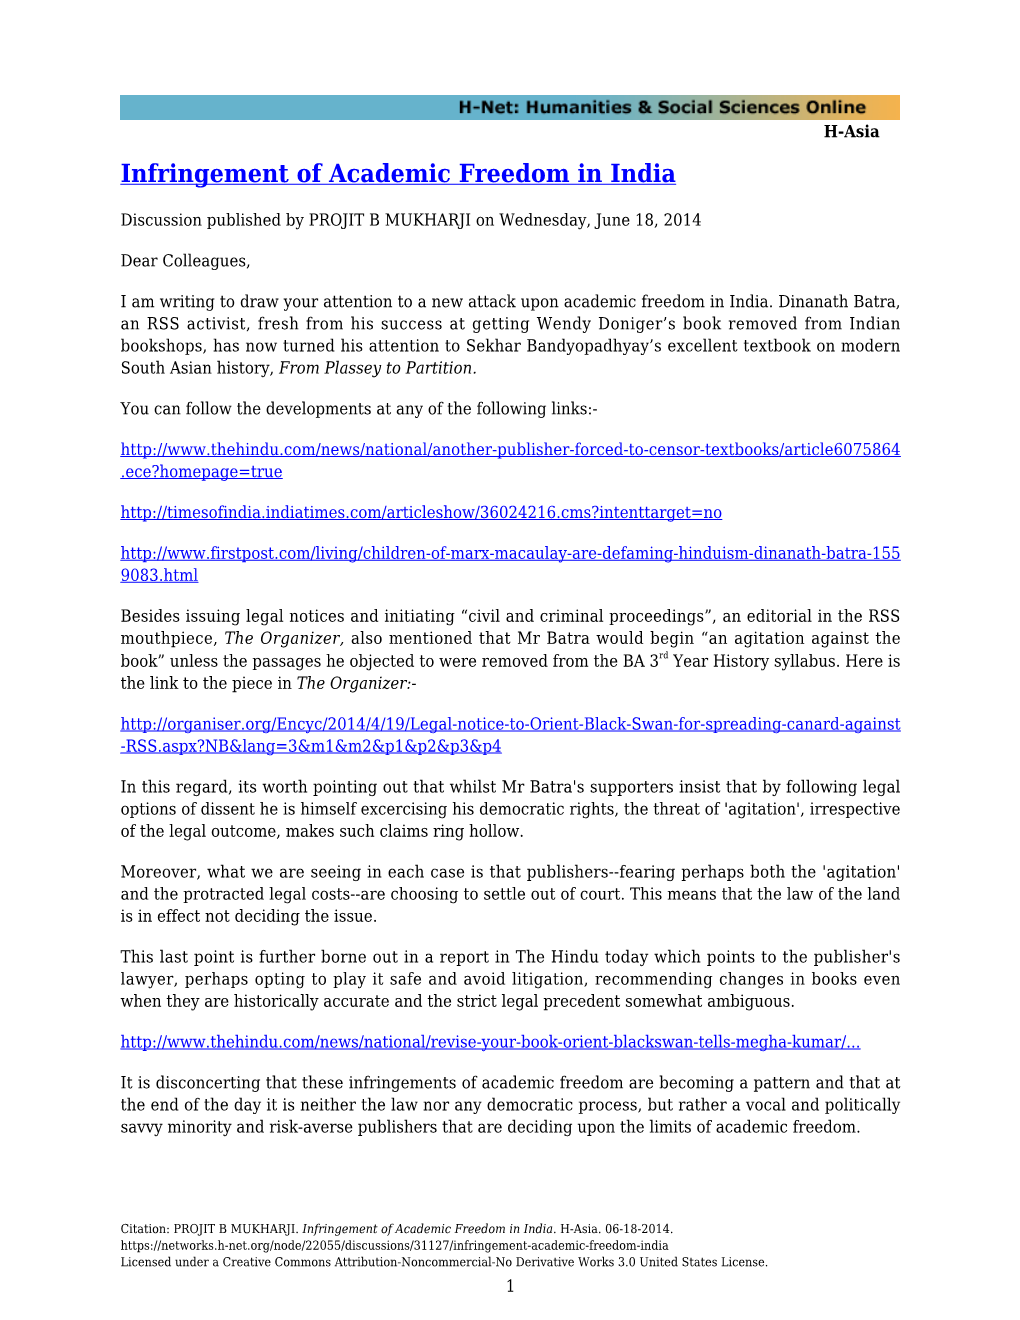 Infringement of Academic Freedom in India